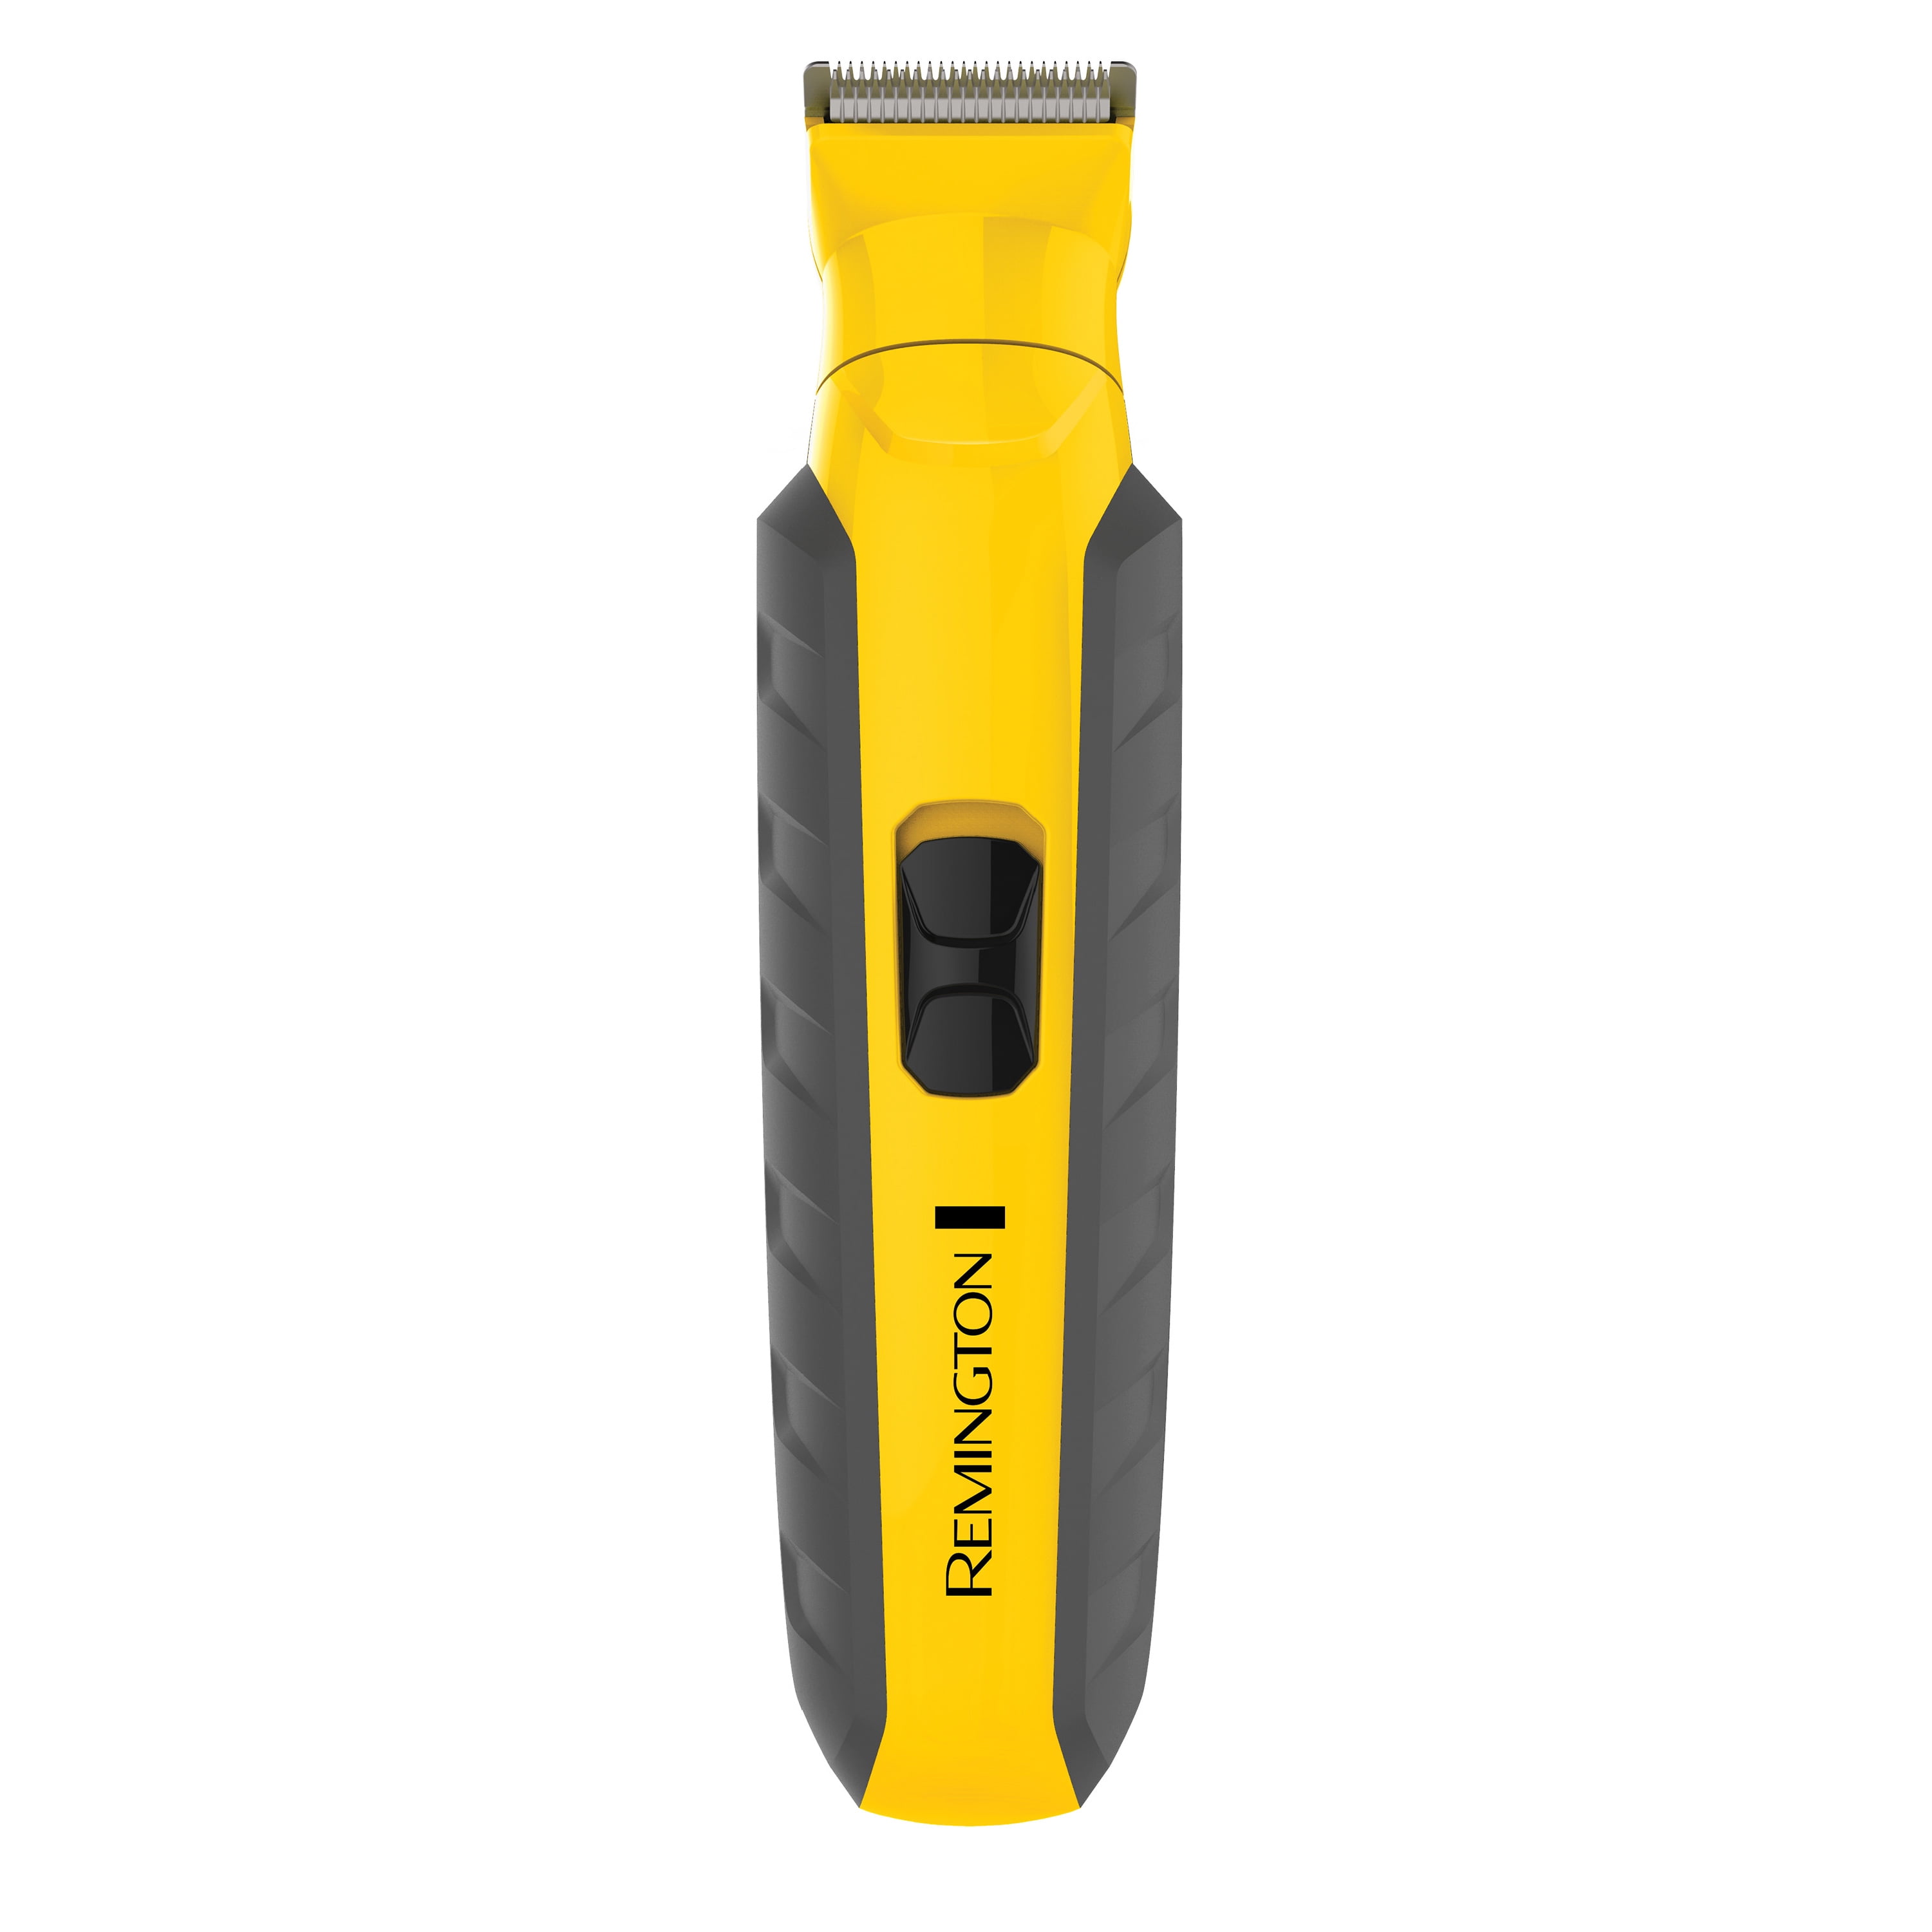 remington indestructible beard trimmer